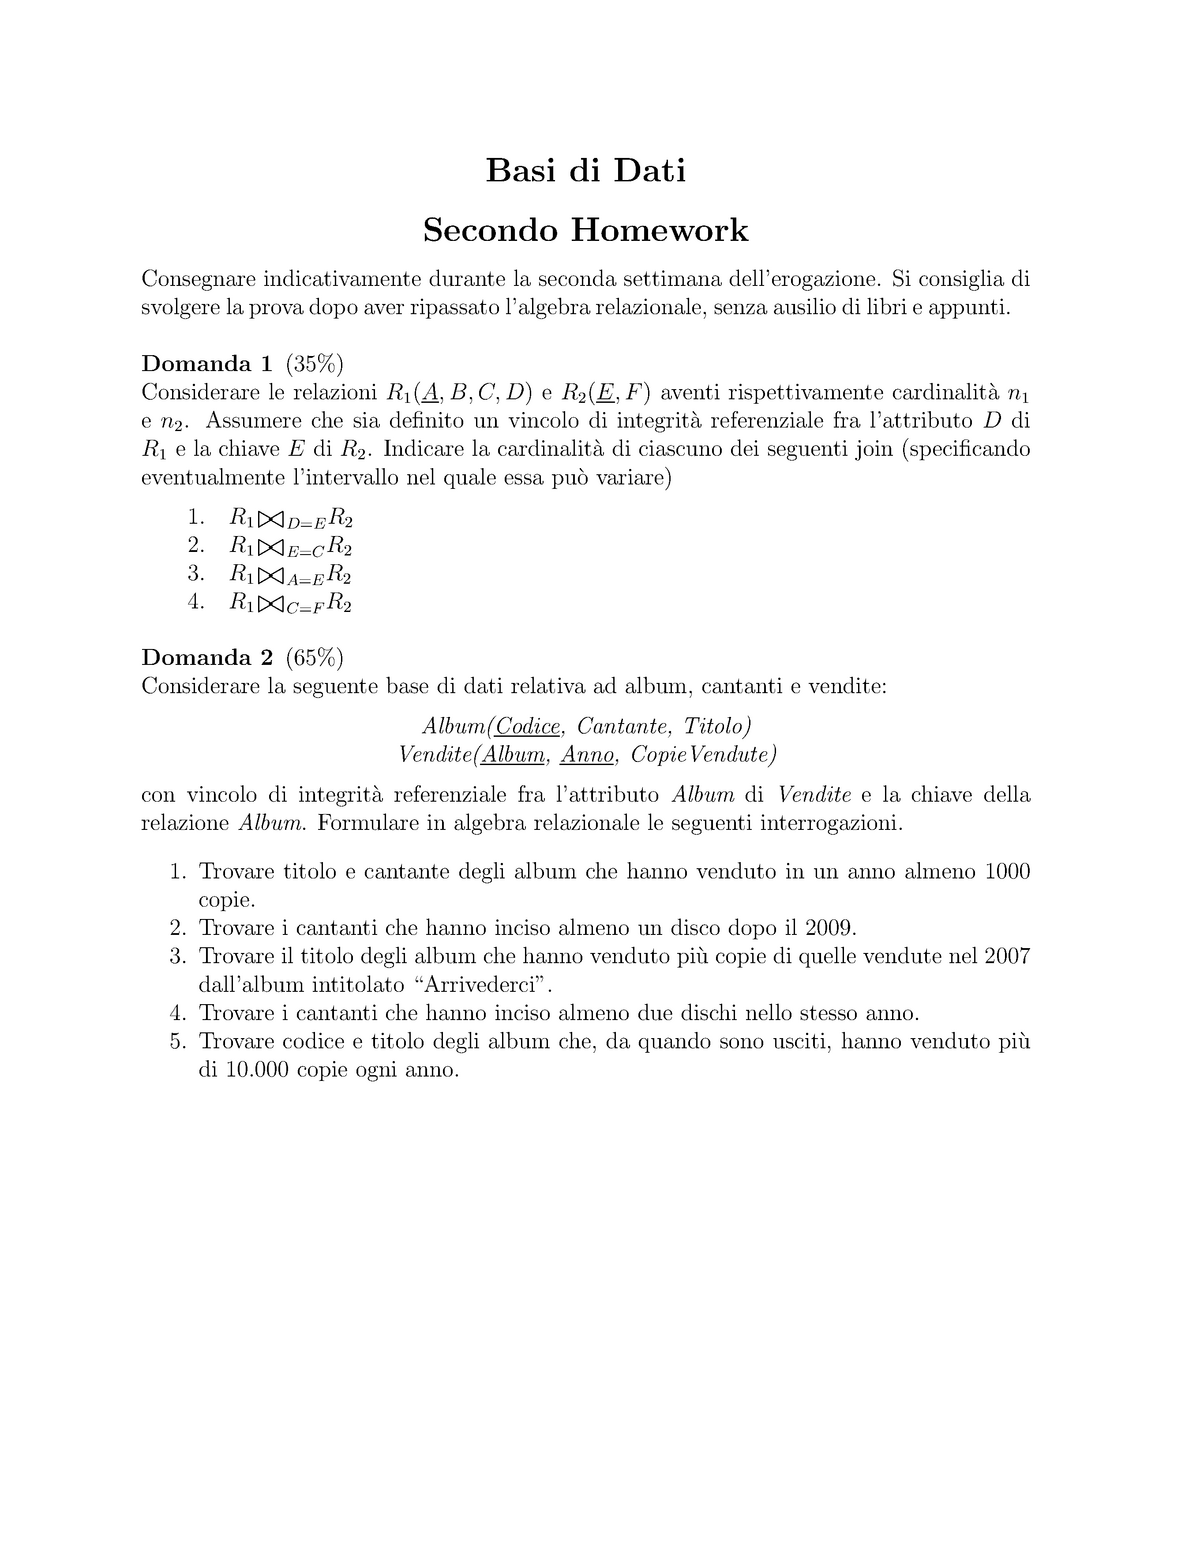 Hw2 - homew - Basi di Dati Secondo Homework Consegnare